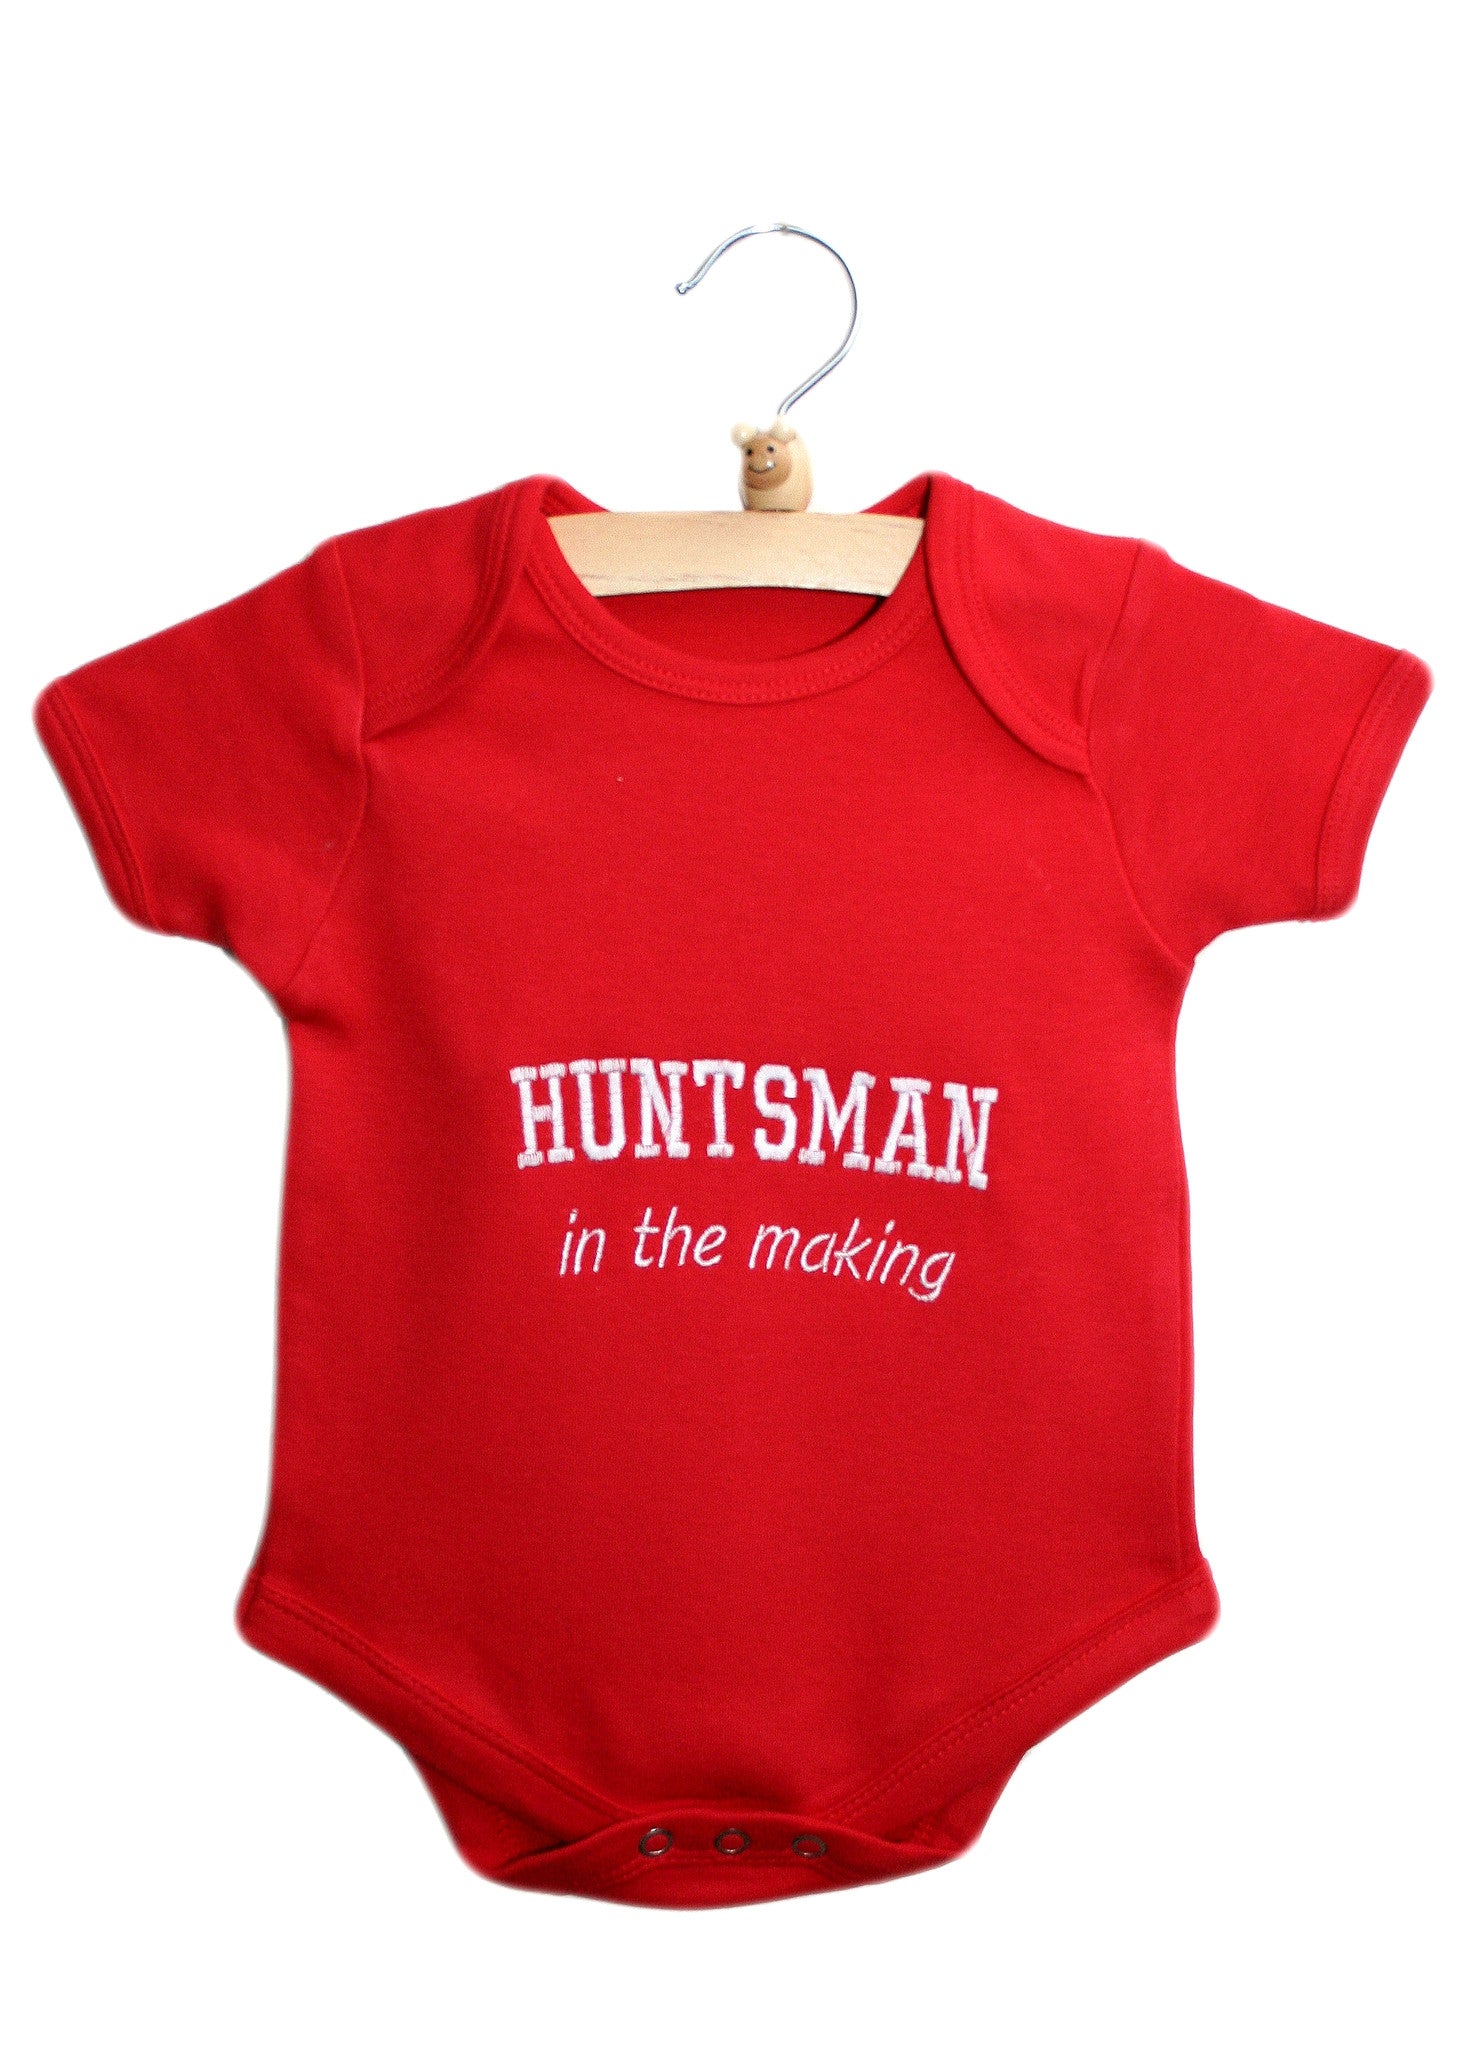 HUNTSMAN in the making Baby Bodysuit – The Old Hunting Habit